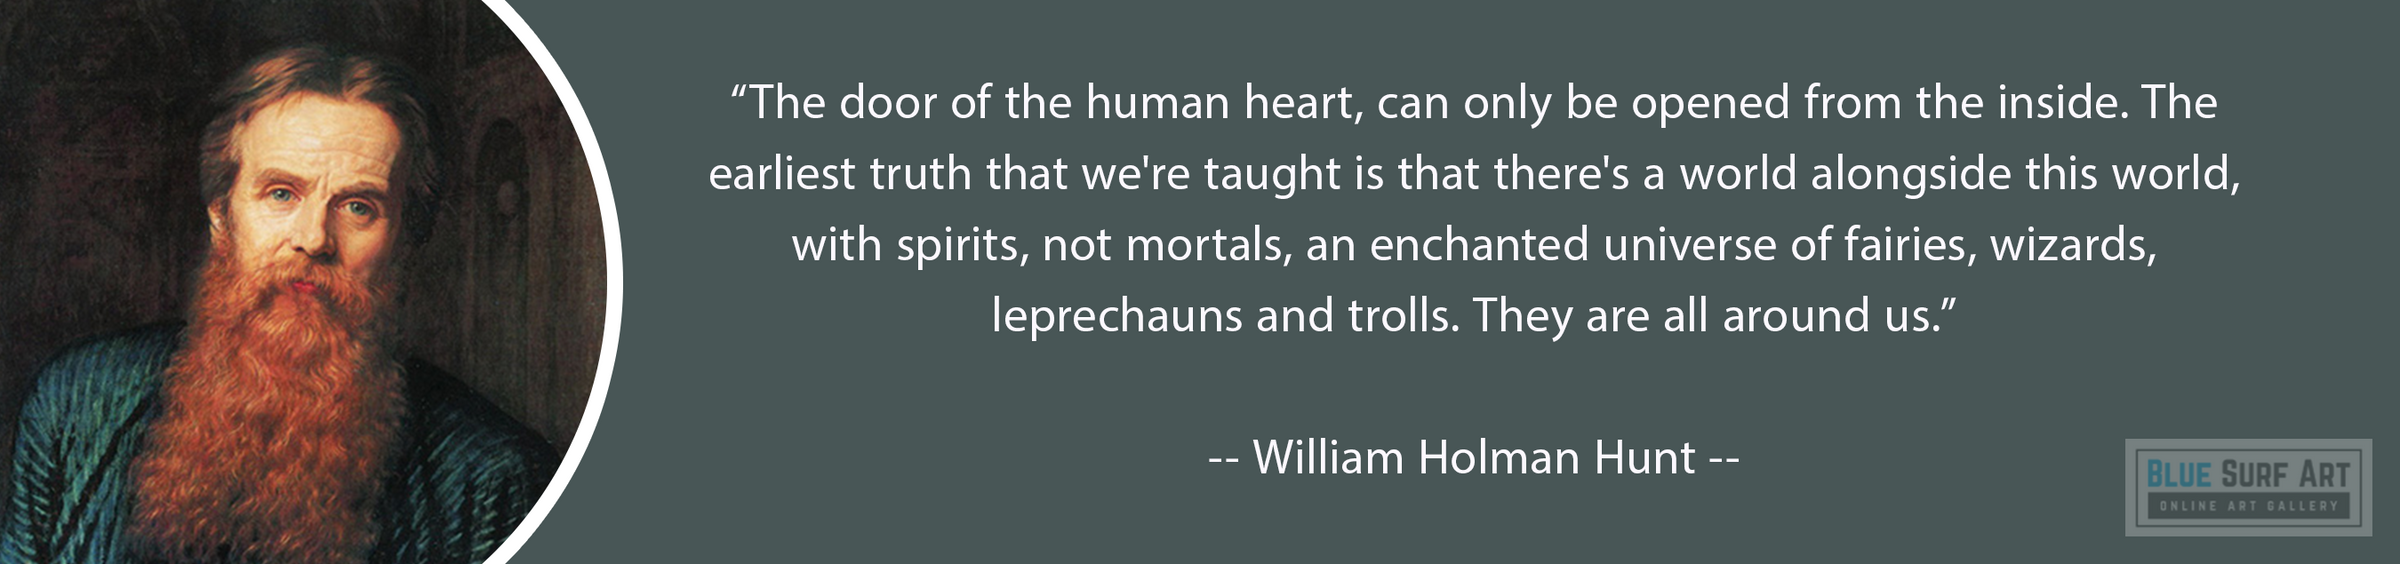 William Holman Hunt, Famous reproduction artist